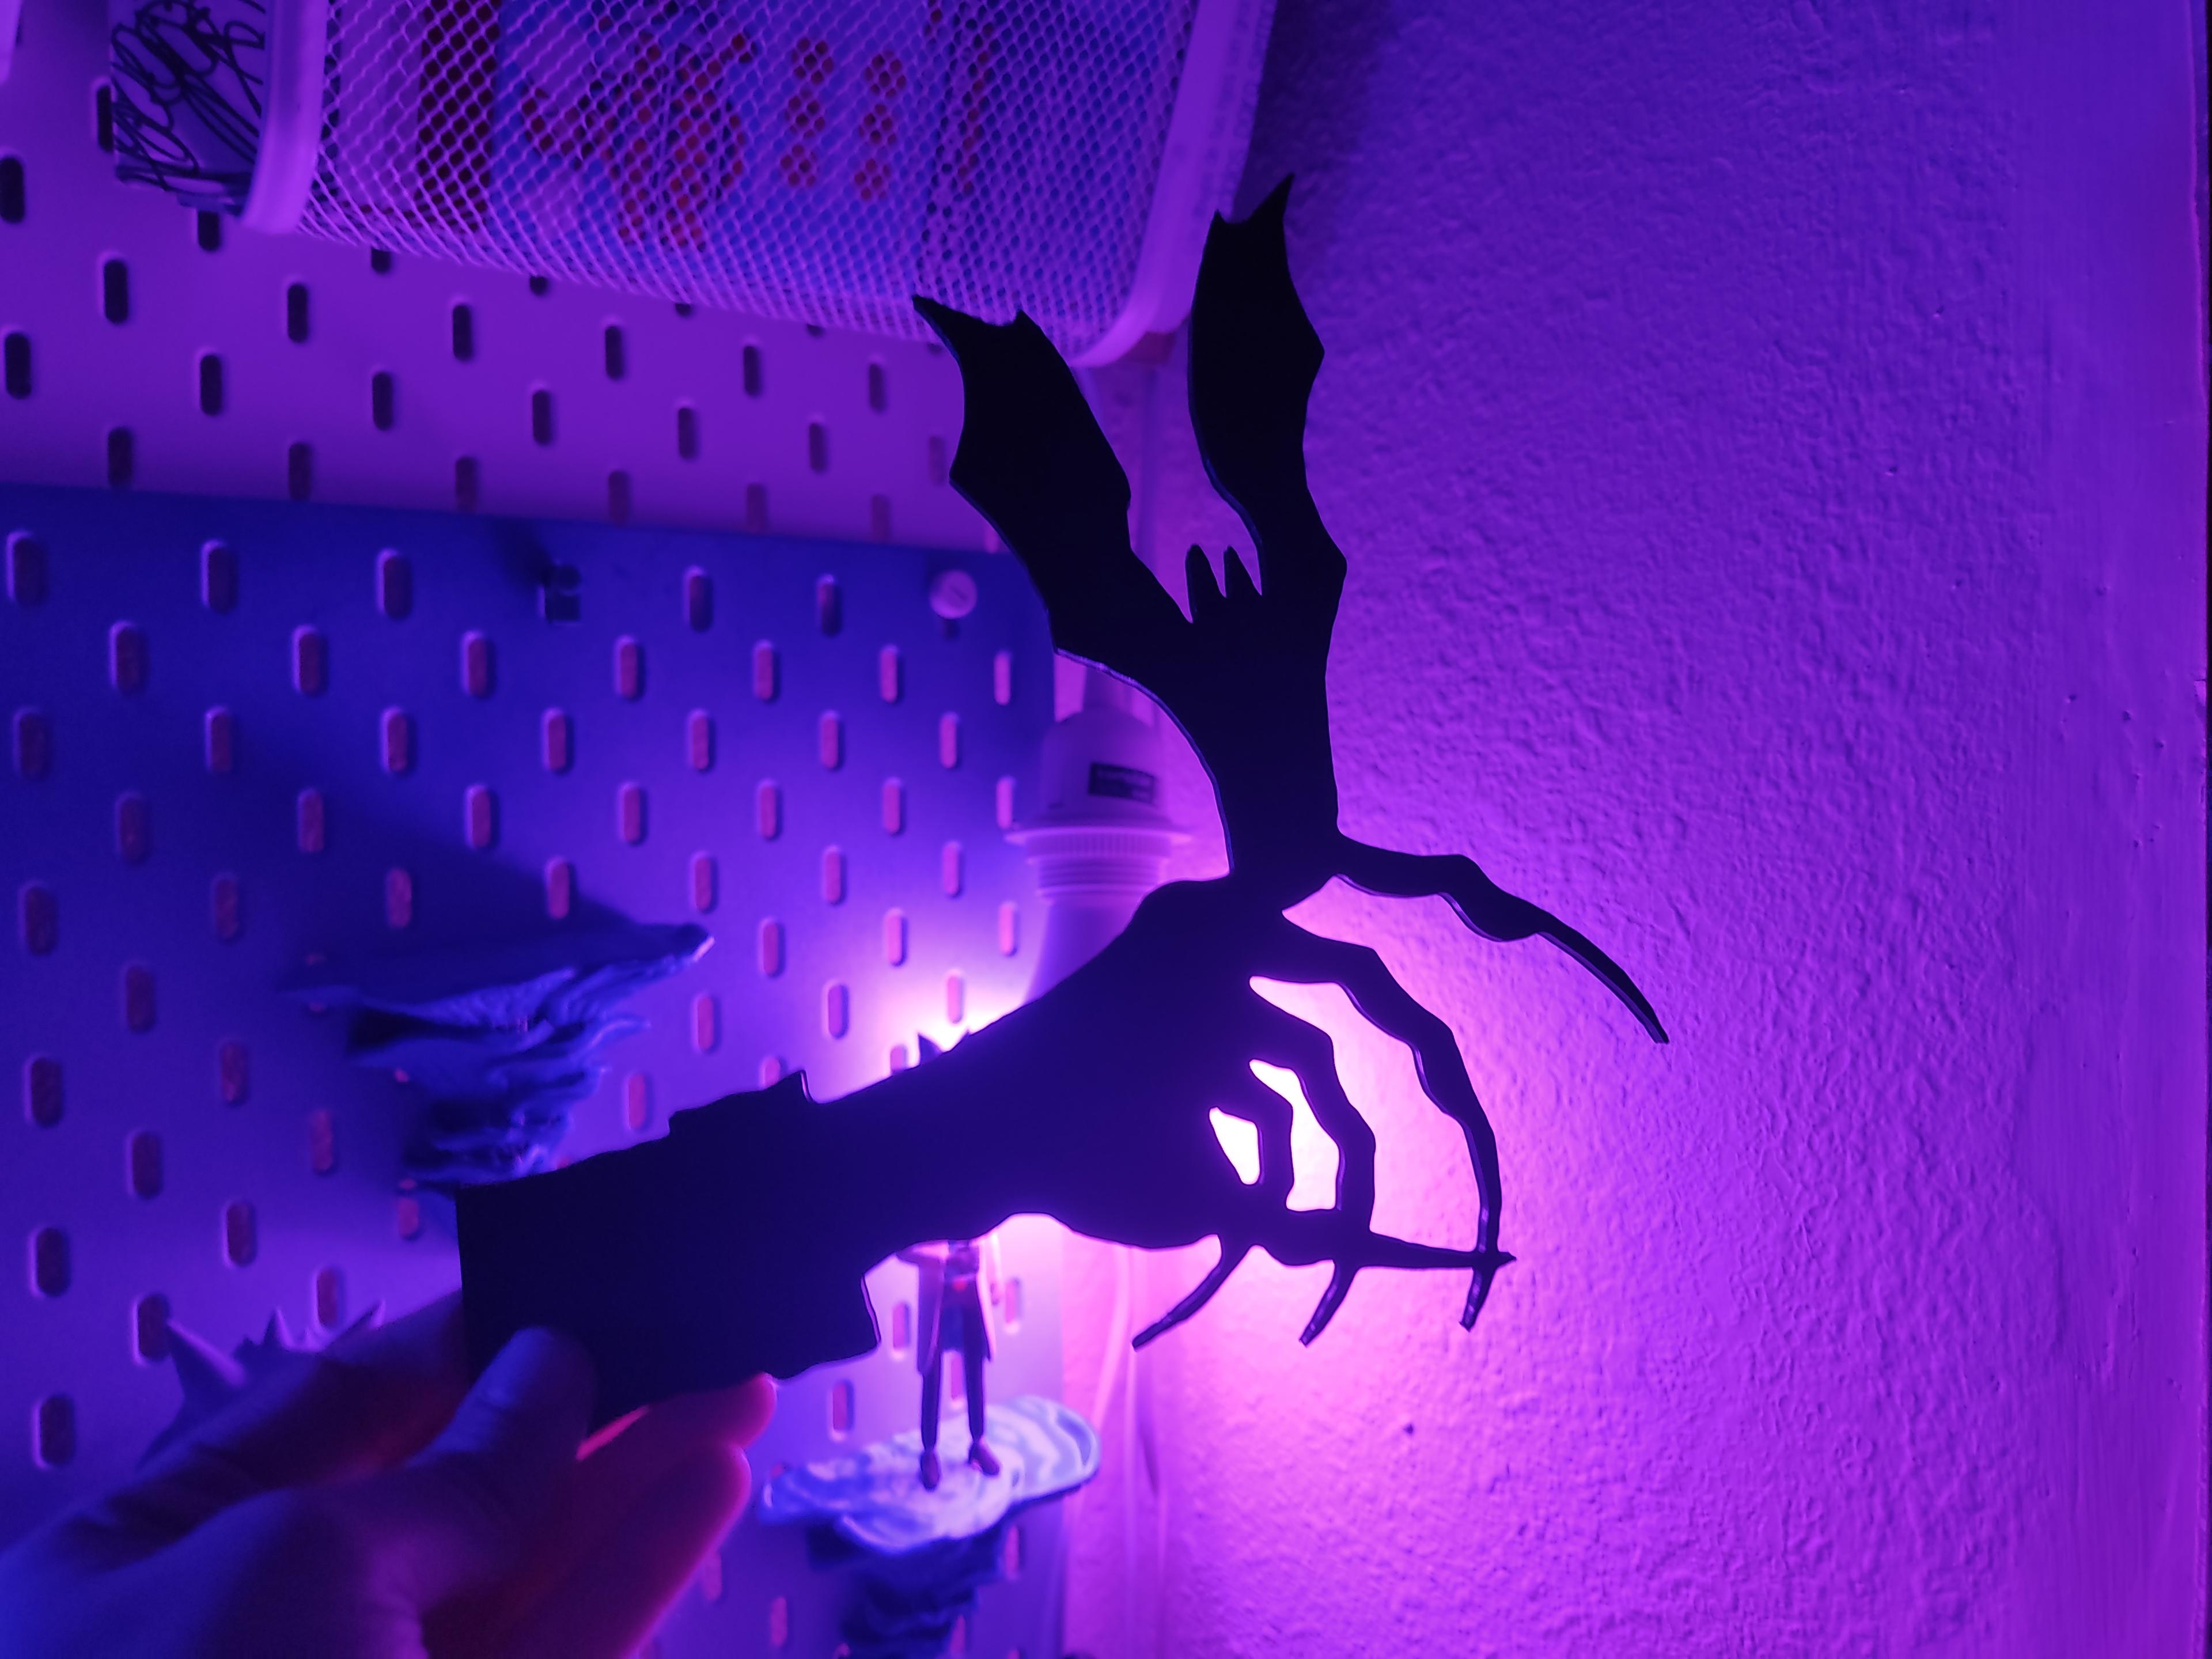 Vampire hand with bat window decoration 3d model